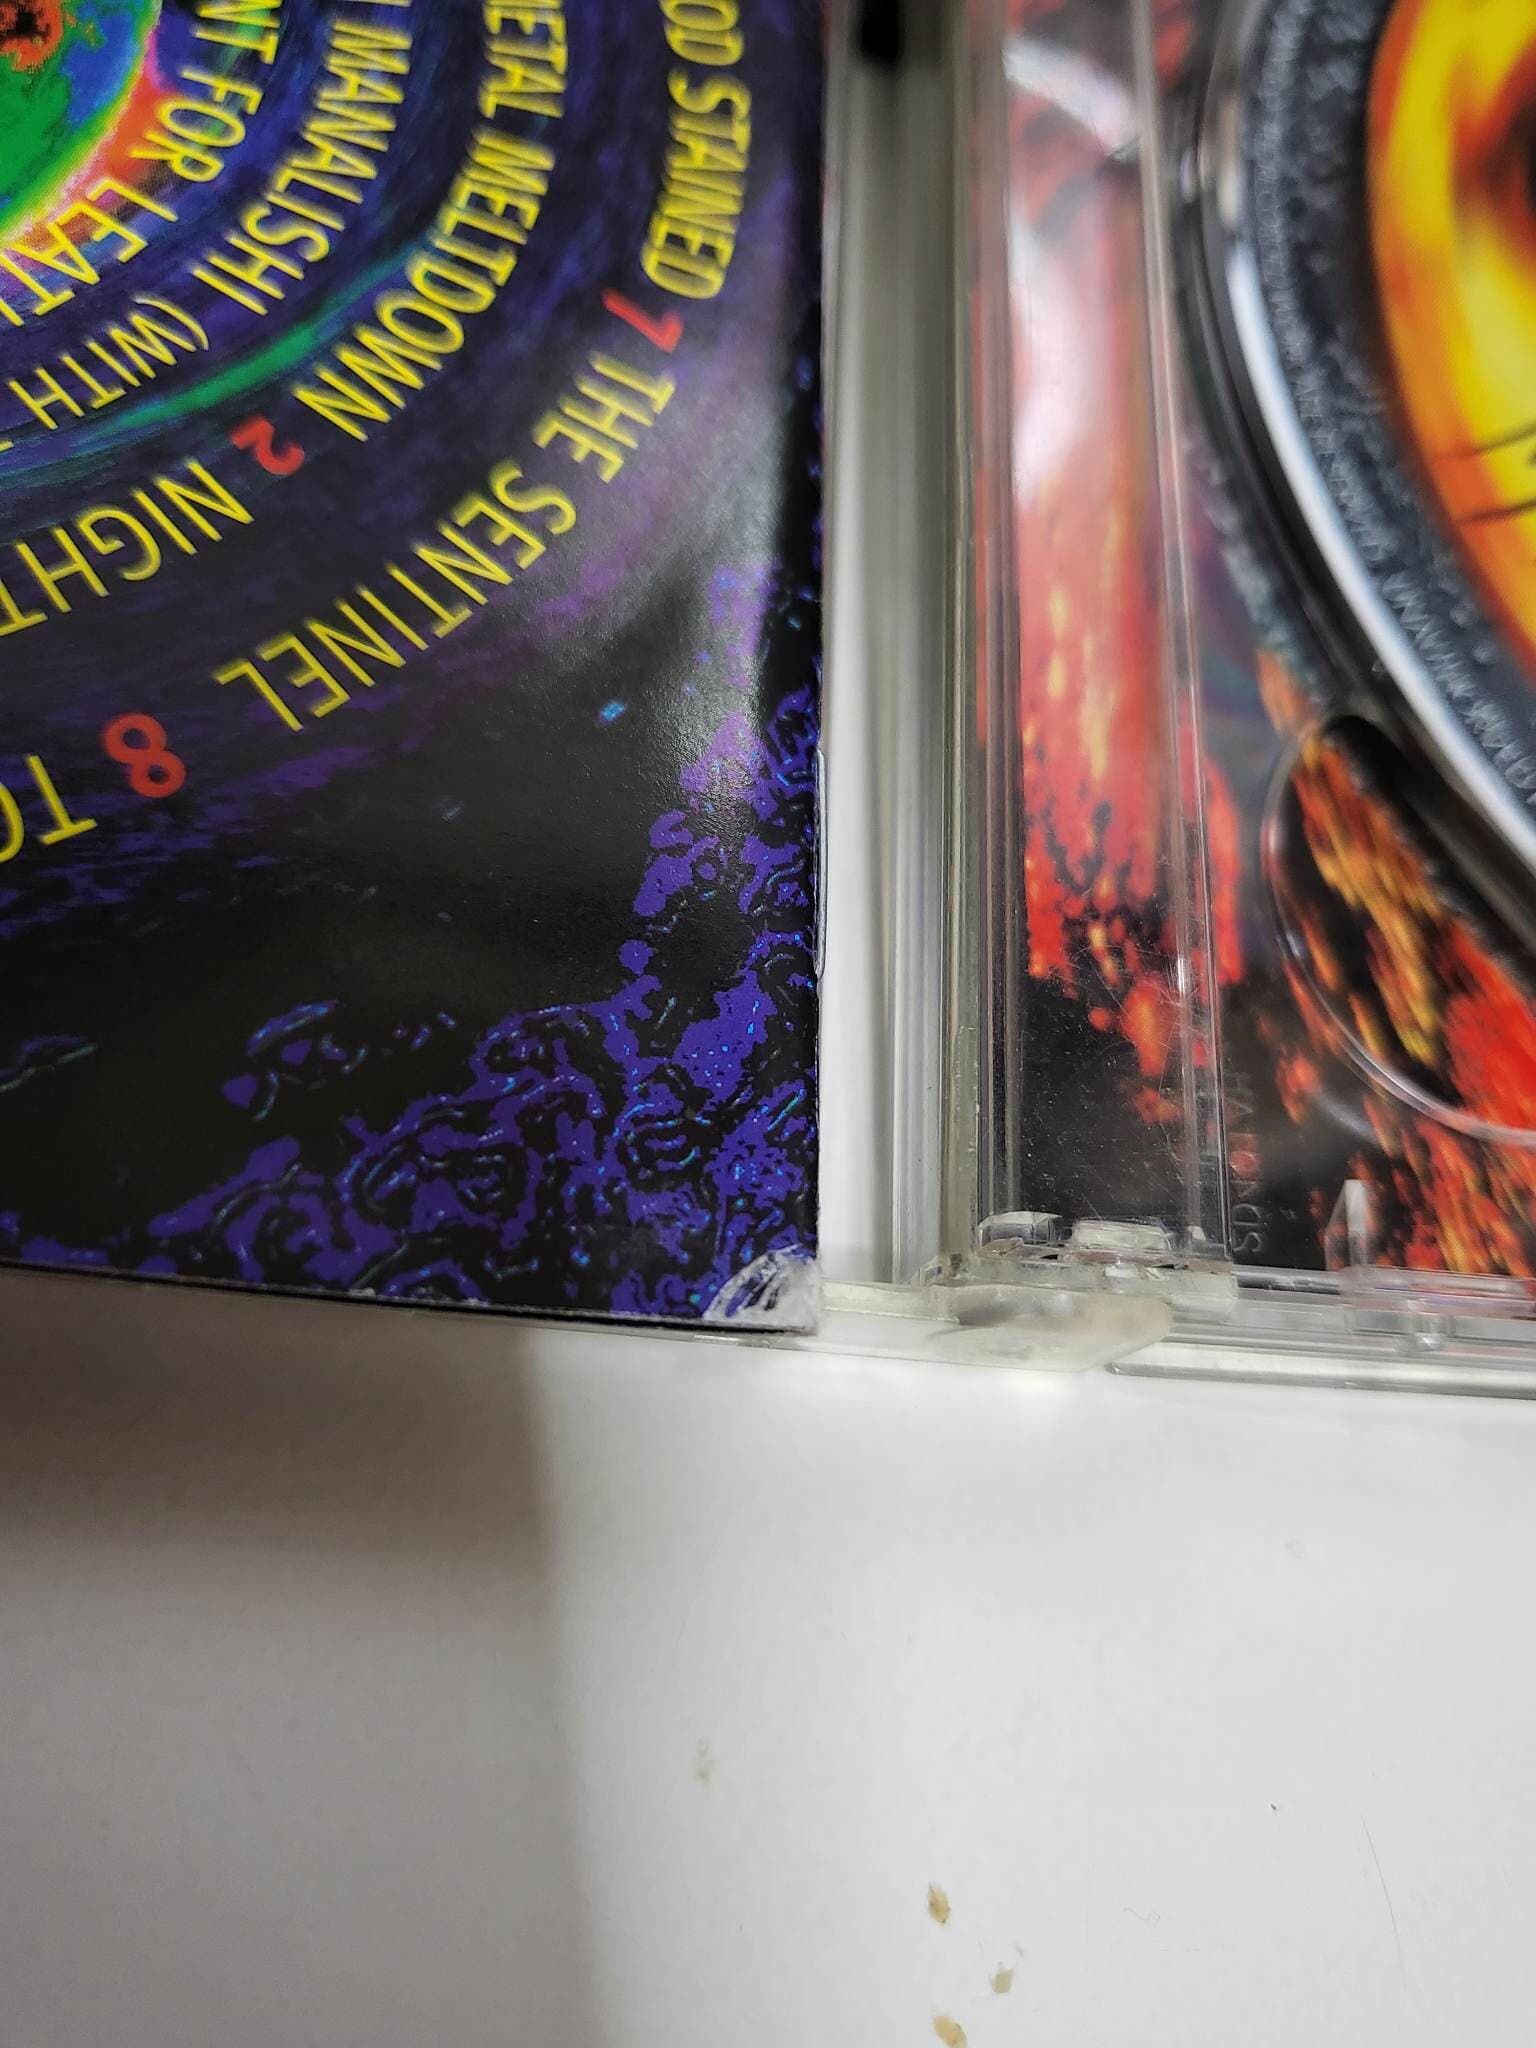 Judas Priest (주다스 프리스트) - '98 Live Meltdown